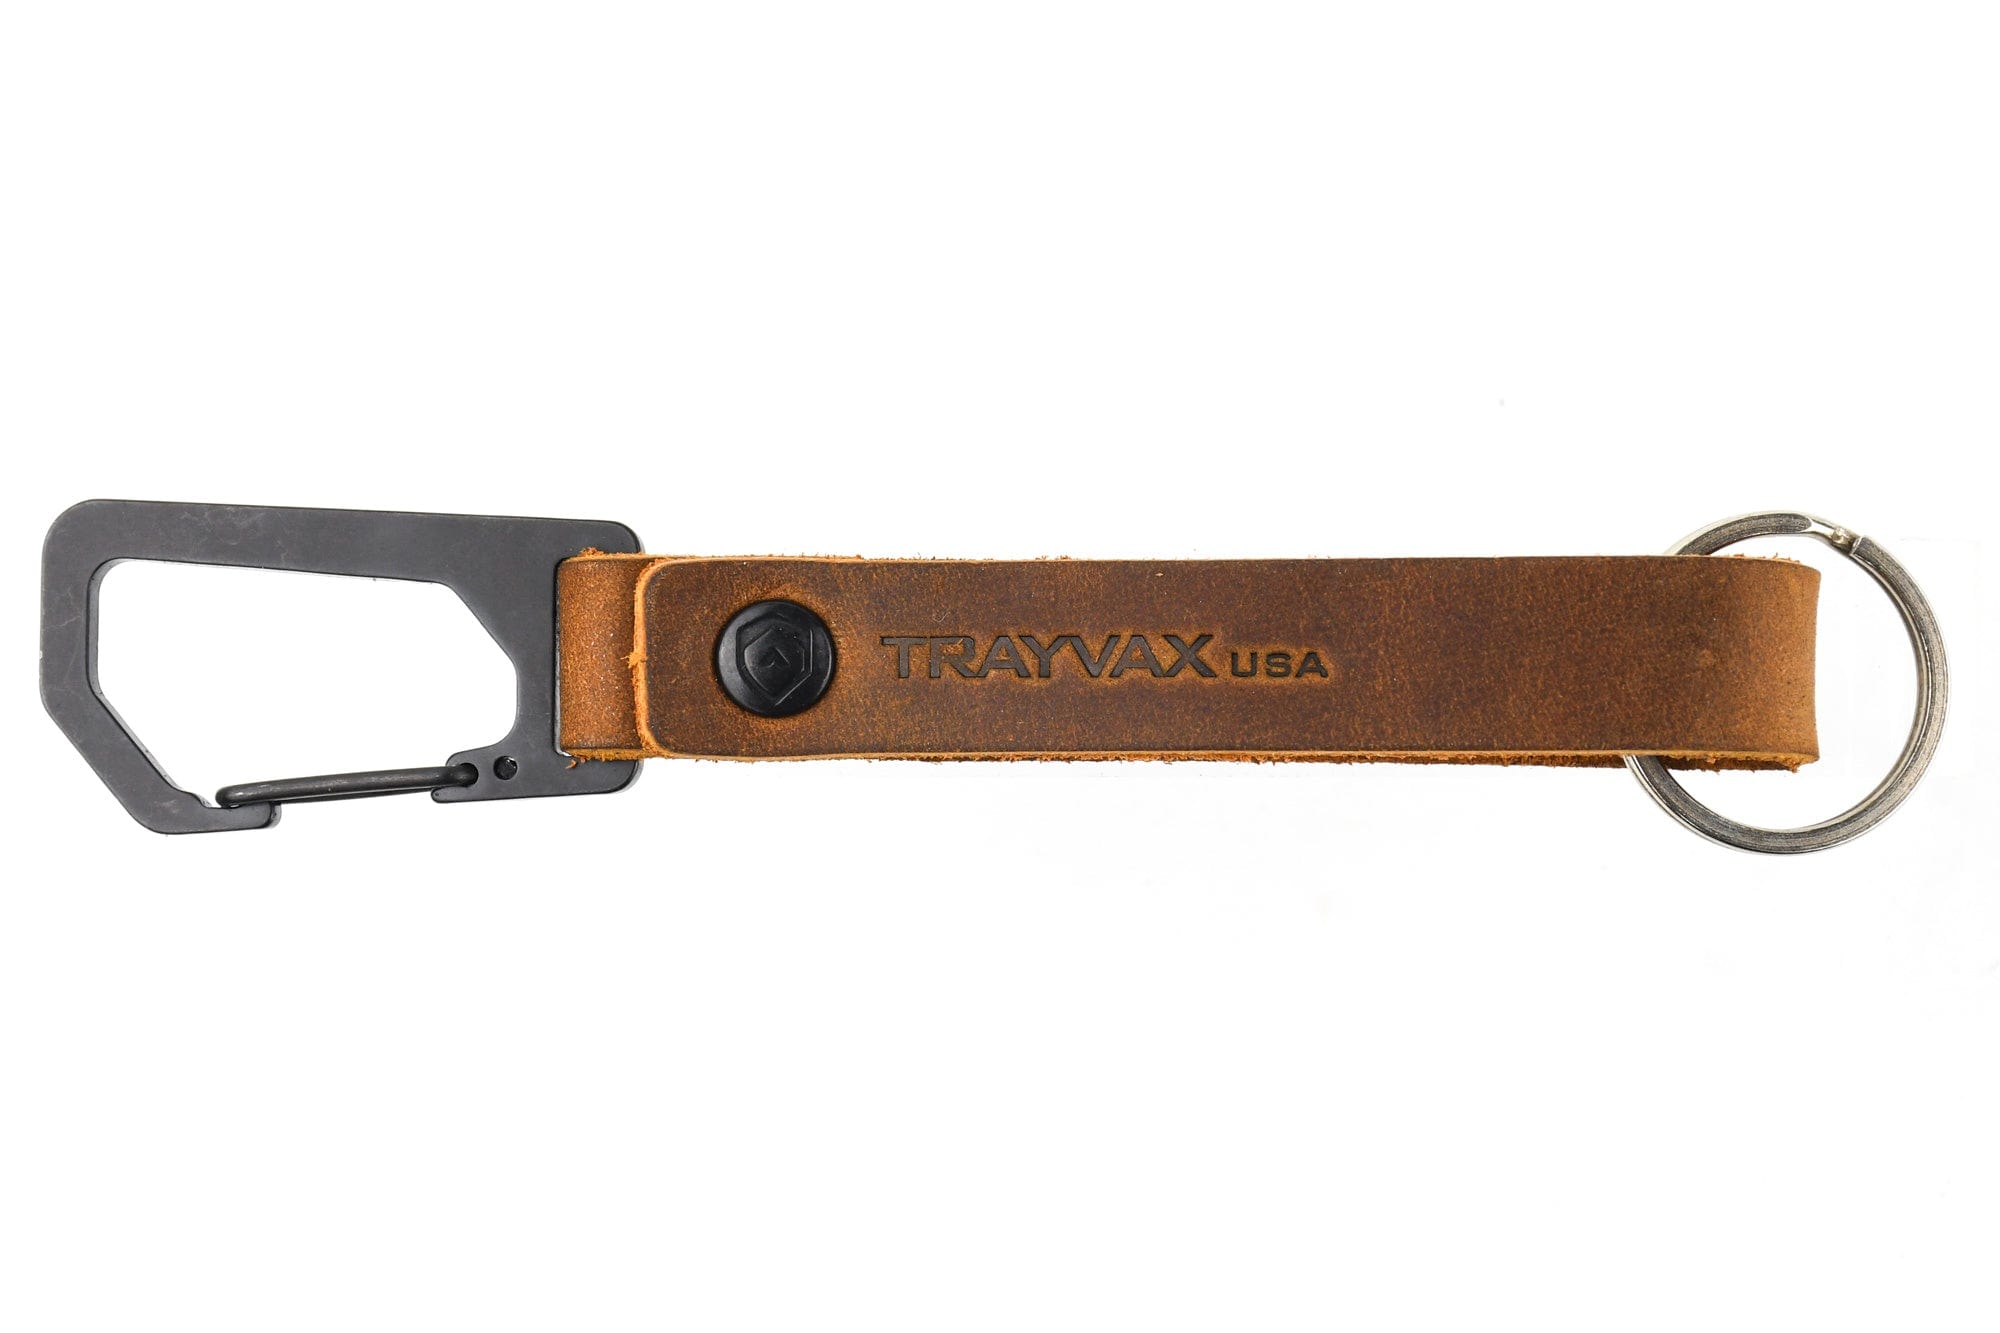 Trayvax Enterprises Accessories Black / Tobacco Brown Keyton Clip | Carabiner Keychain